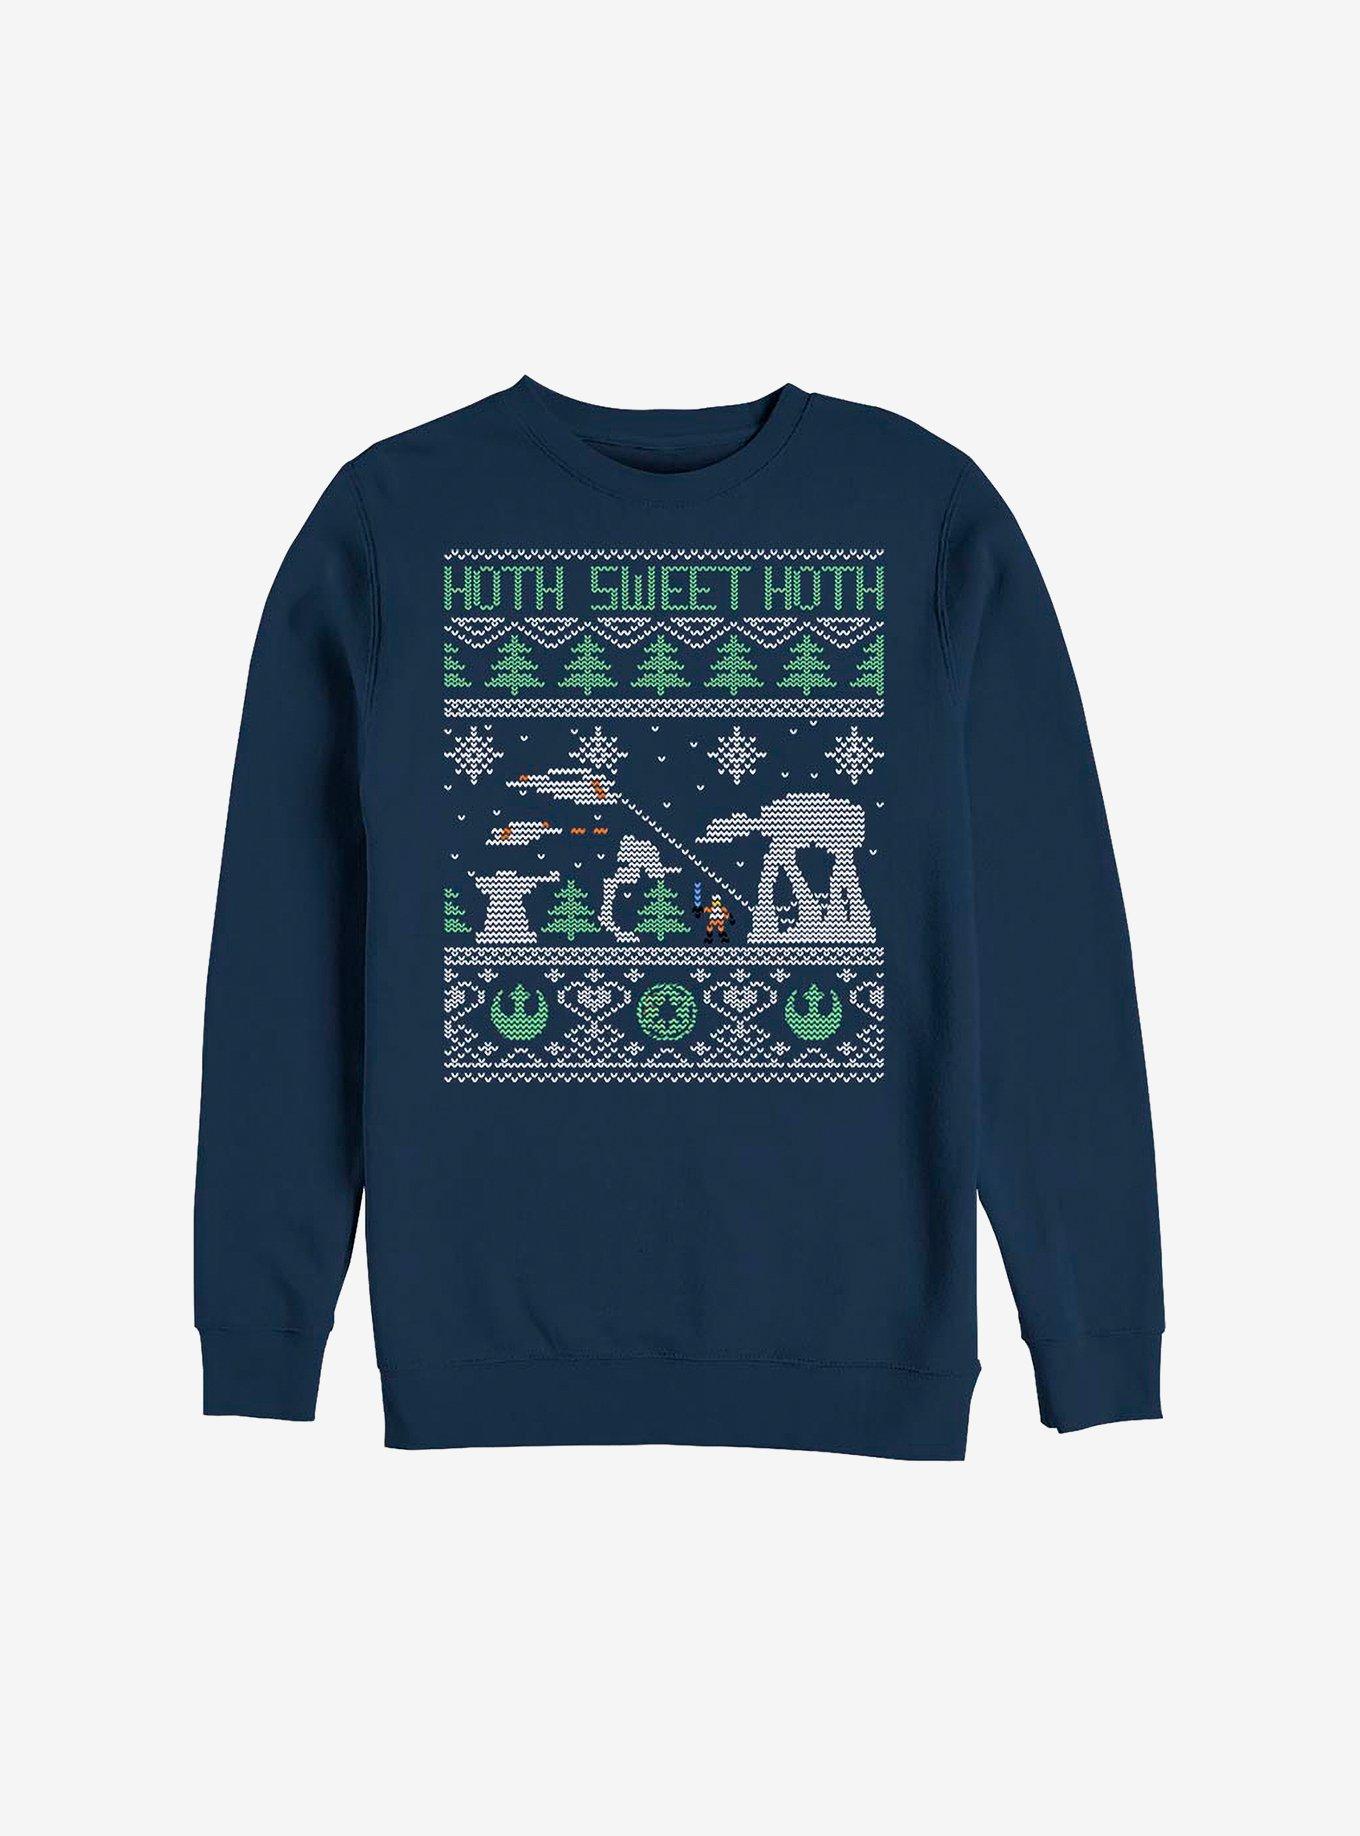 Star Wars Hoth Sweet Holiday Battle Christmas Ugly Sweater Sweatshirt